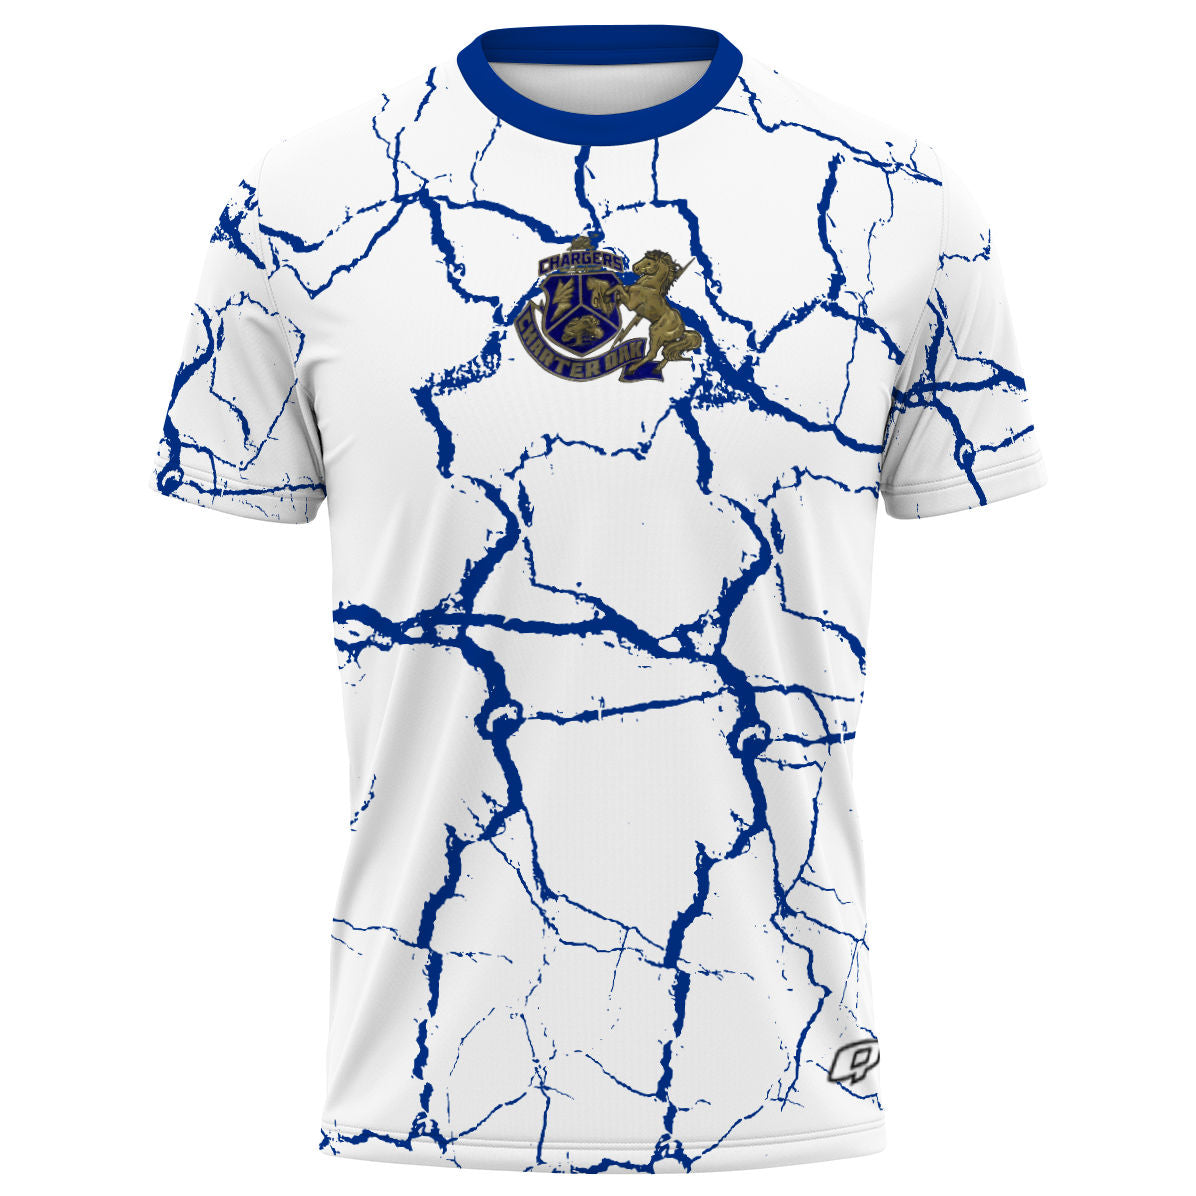 Charter Oak Waterpolo - Men's Performance Shirt